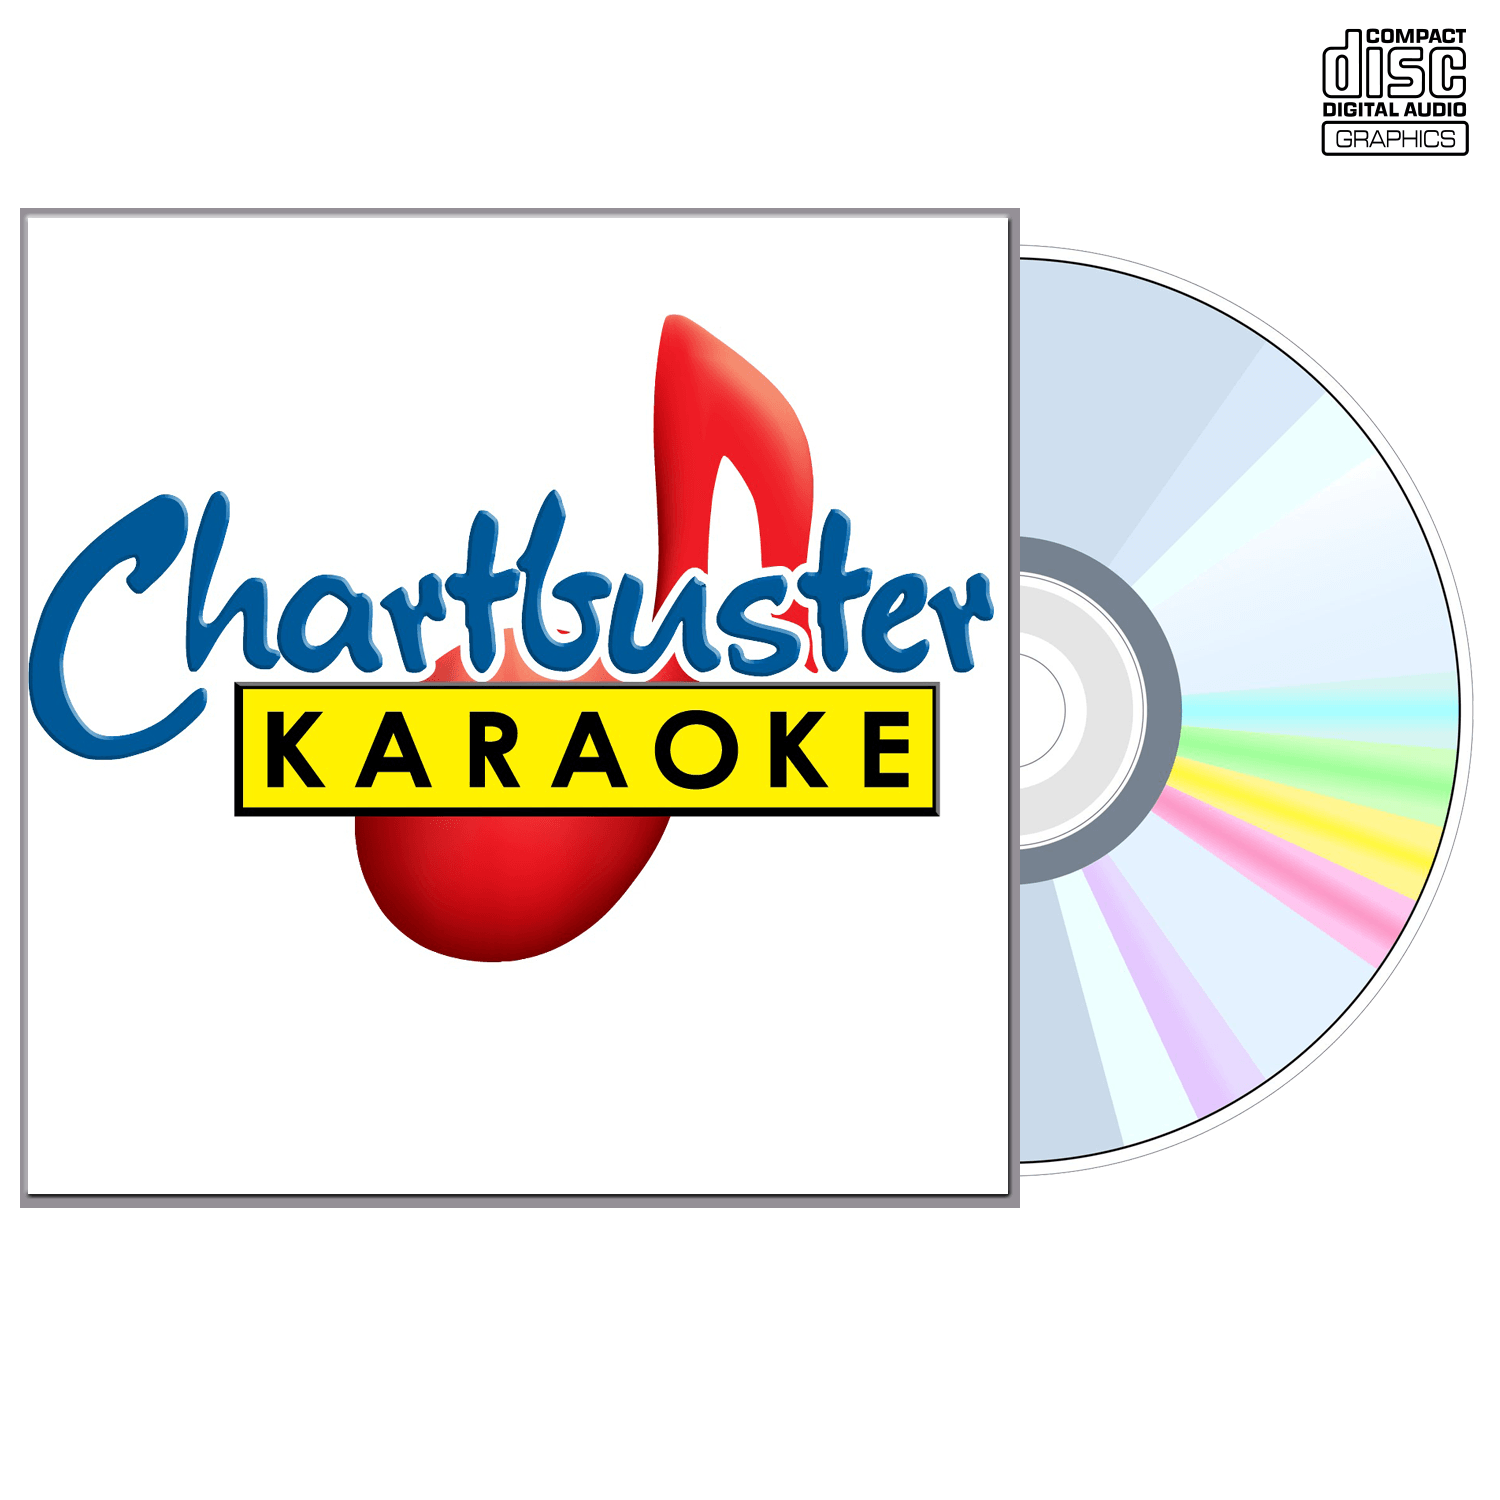 Alan Jackson Vol 4 - CD+G - Chartbuster Karaoke - Karaoke Home Entertainment